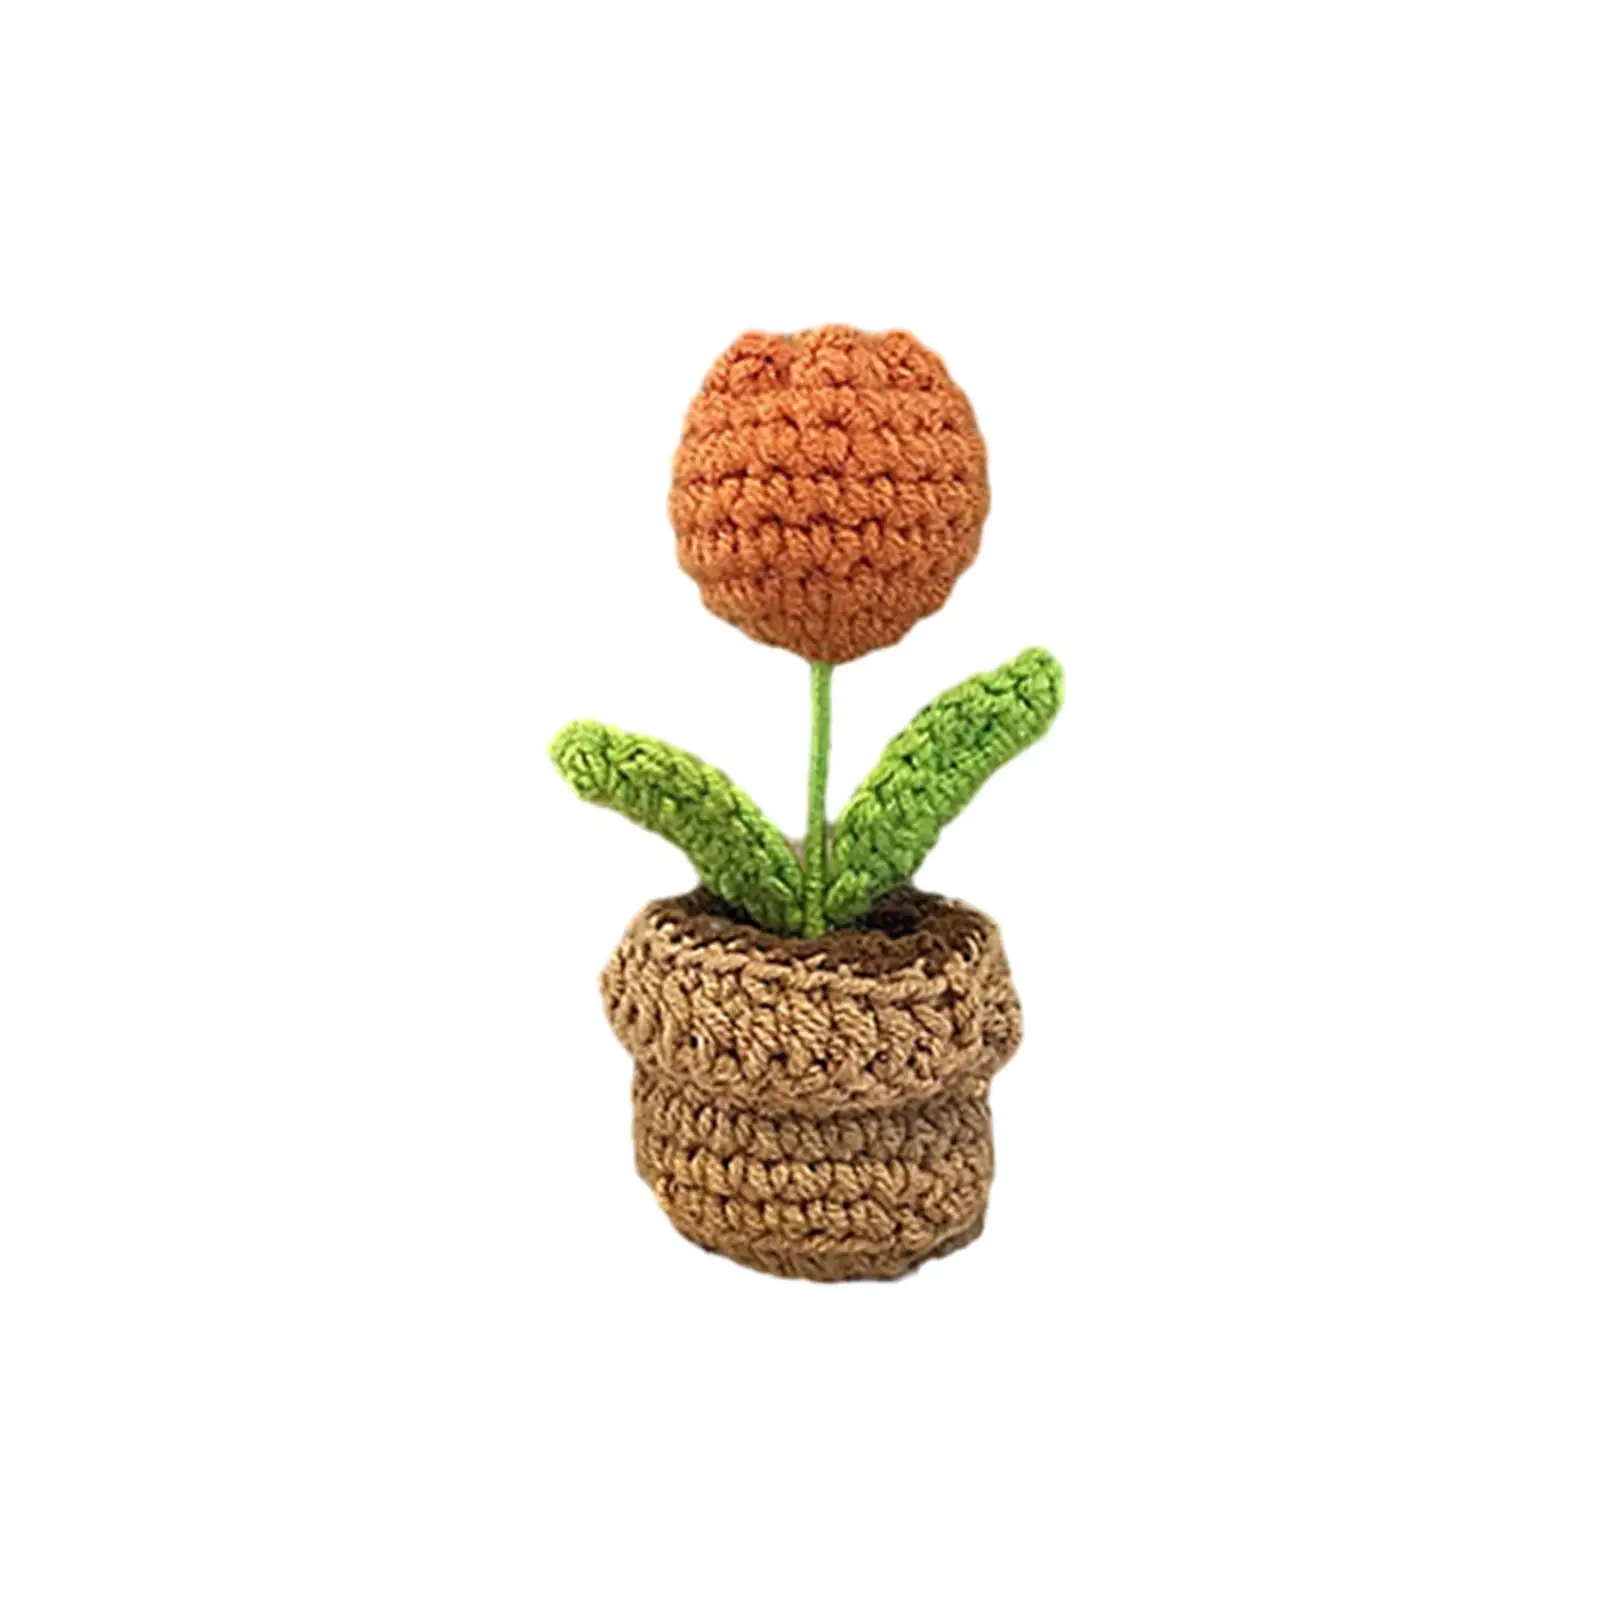 Knitting Crochet Flower Bouquet Handmade with Green Leaves Crochet Artificial Flower for Bathroom Rustic Shelf Ornaments Gifts